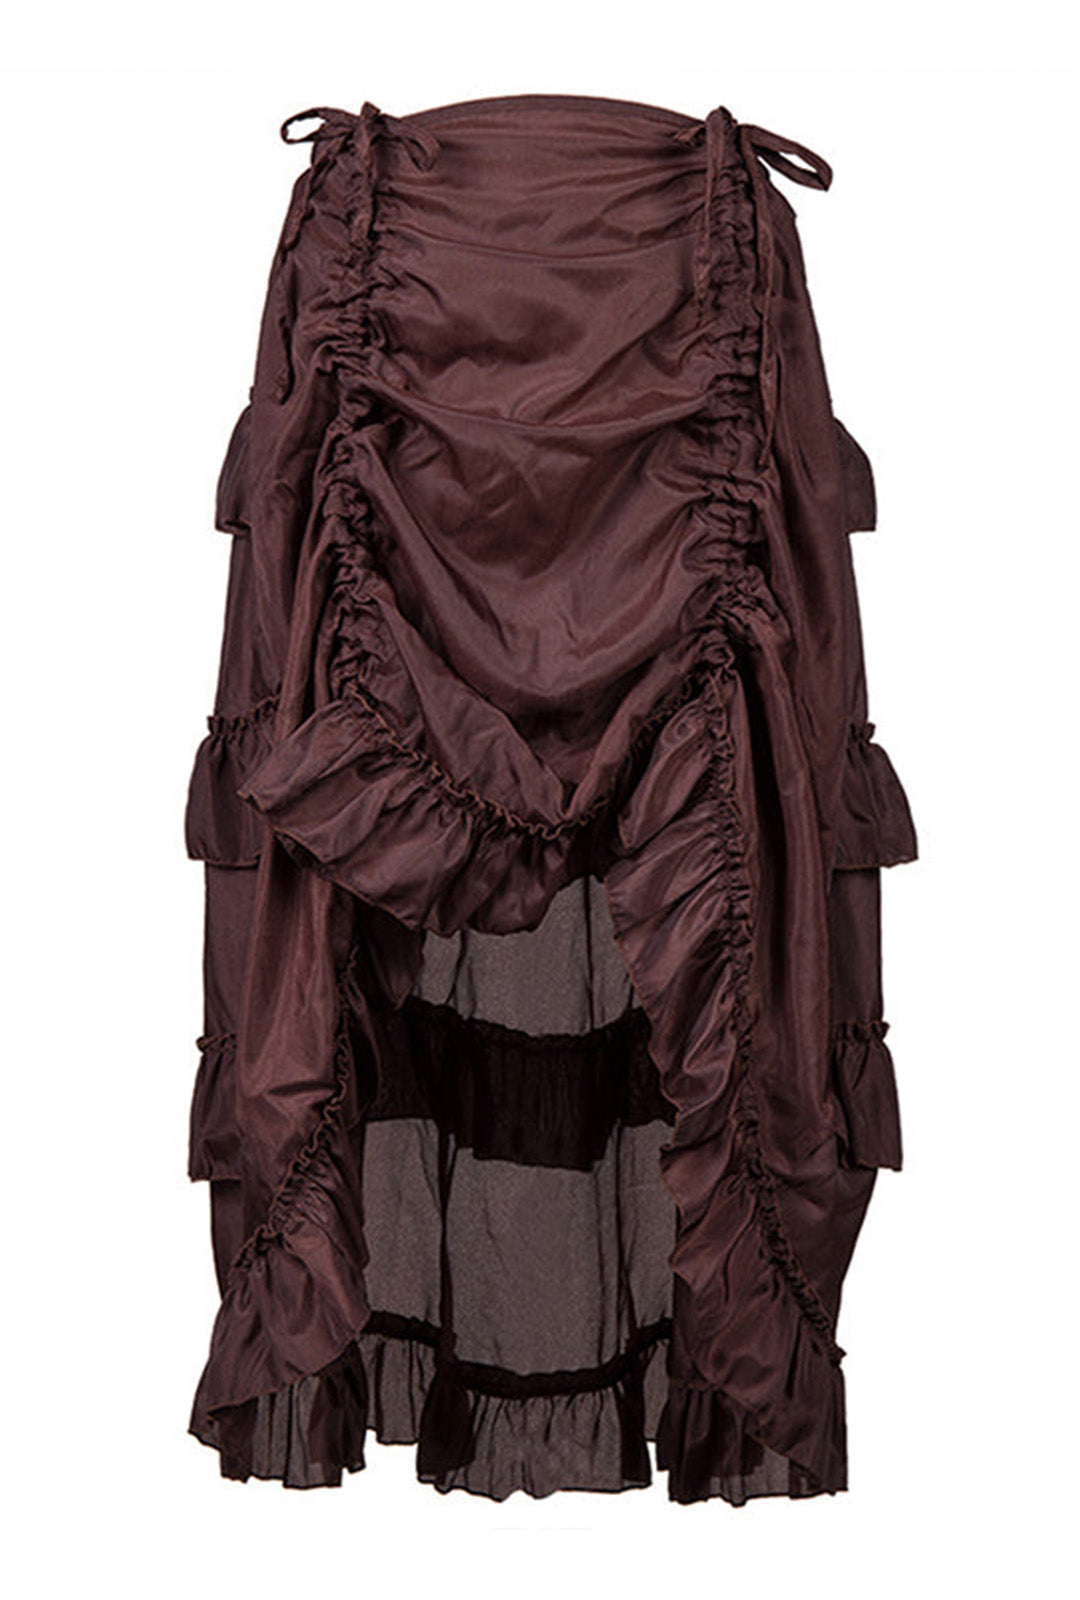 Brown High-Low Steampunk Skirt